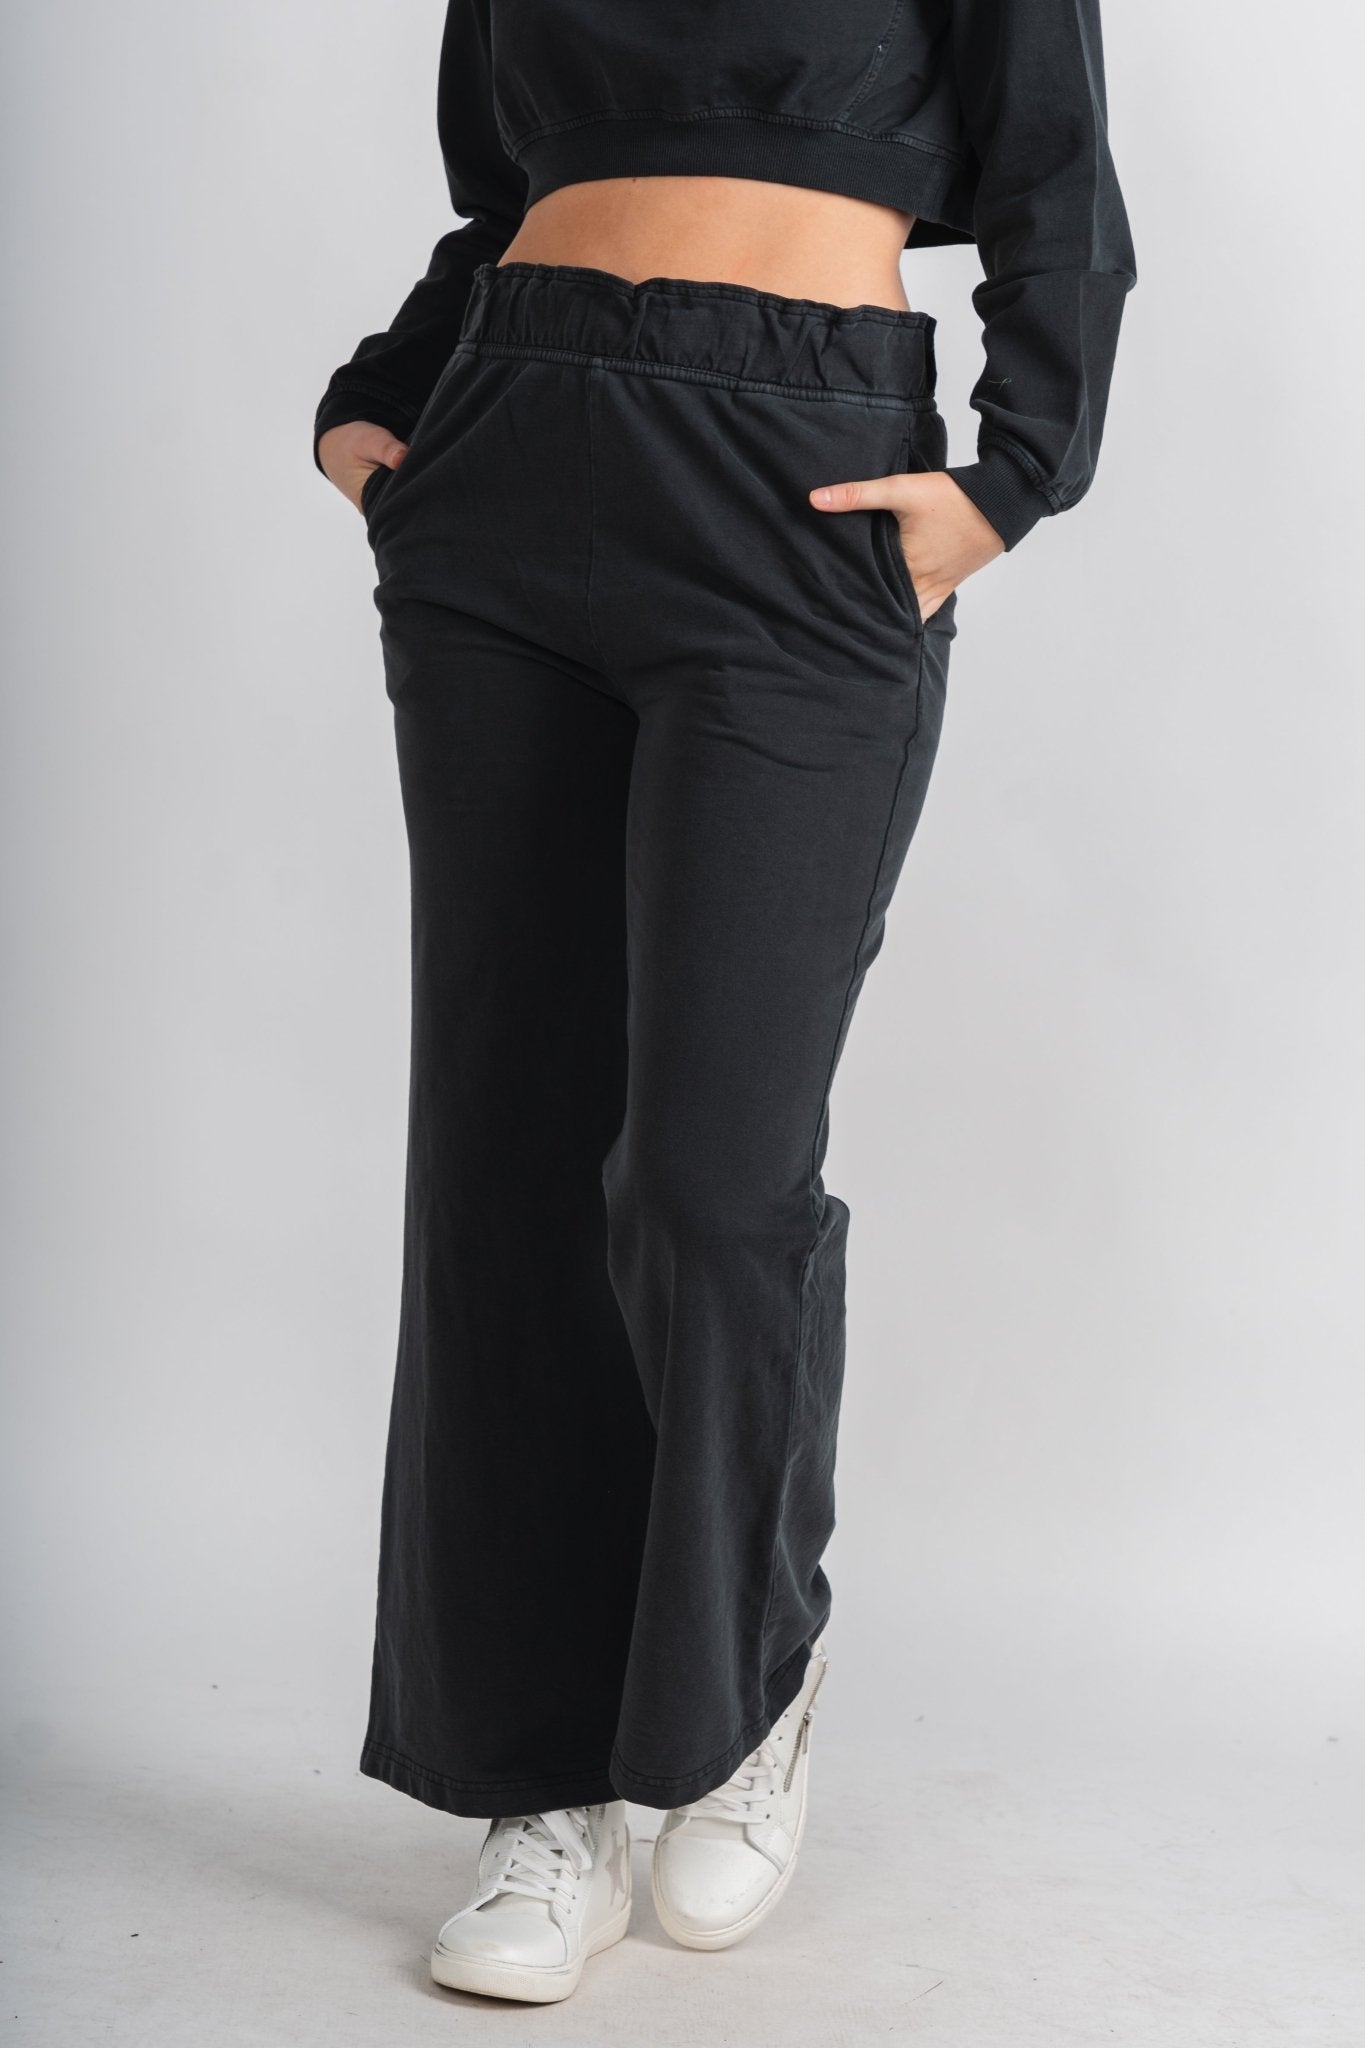 Mineral sweatpants black - Cute Pants - Fun Cozy Basics at Lush Fashion Lounge Boutique in Oklahoma City